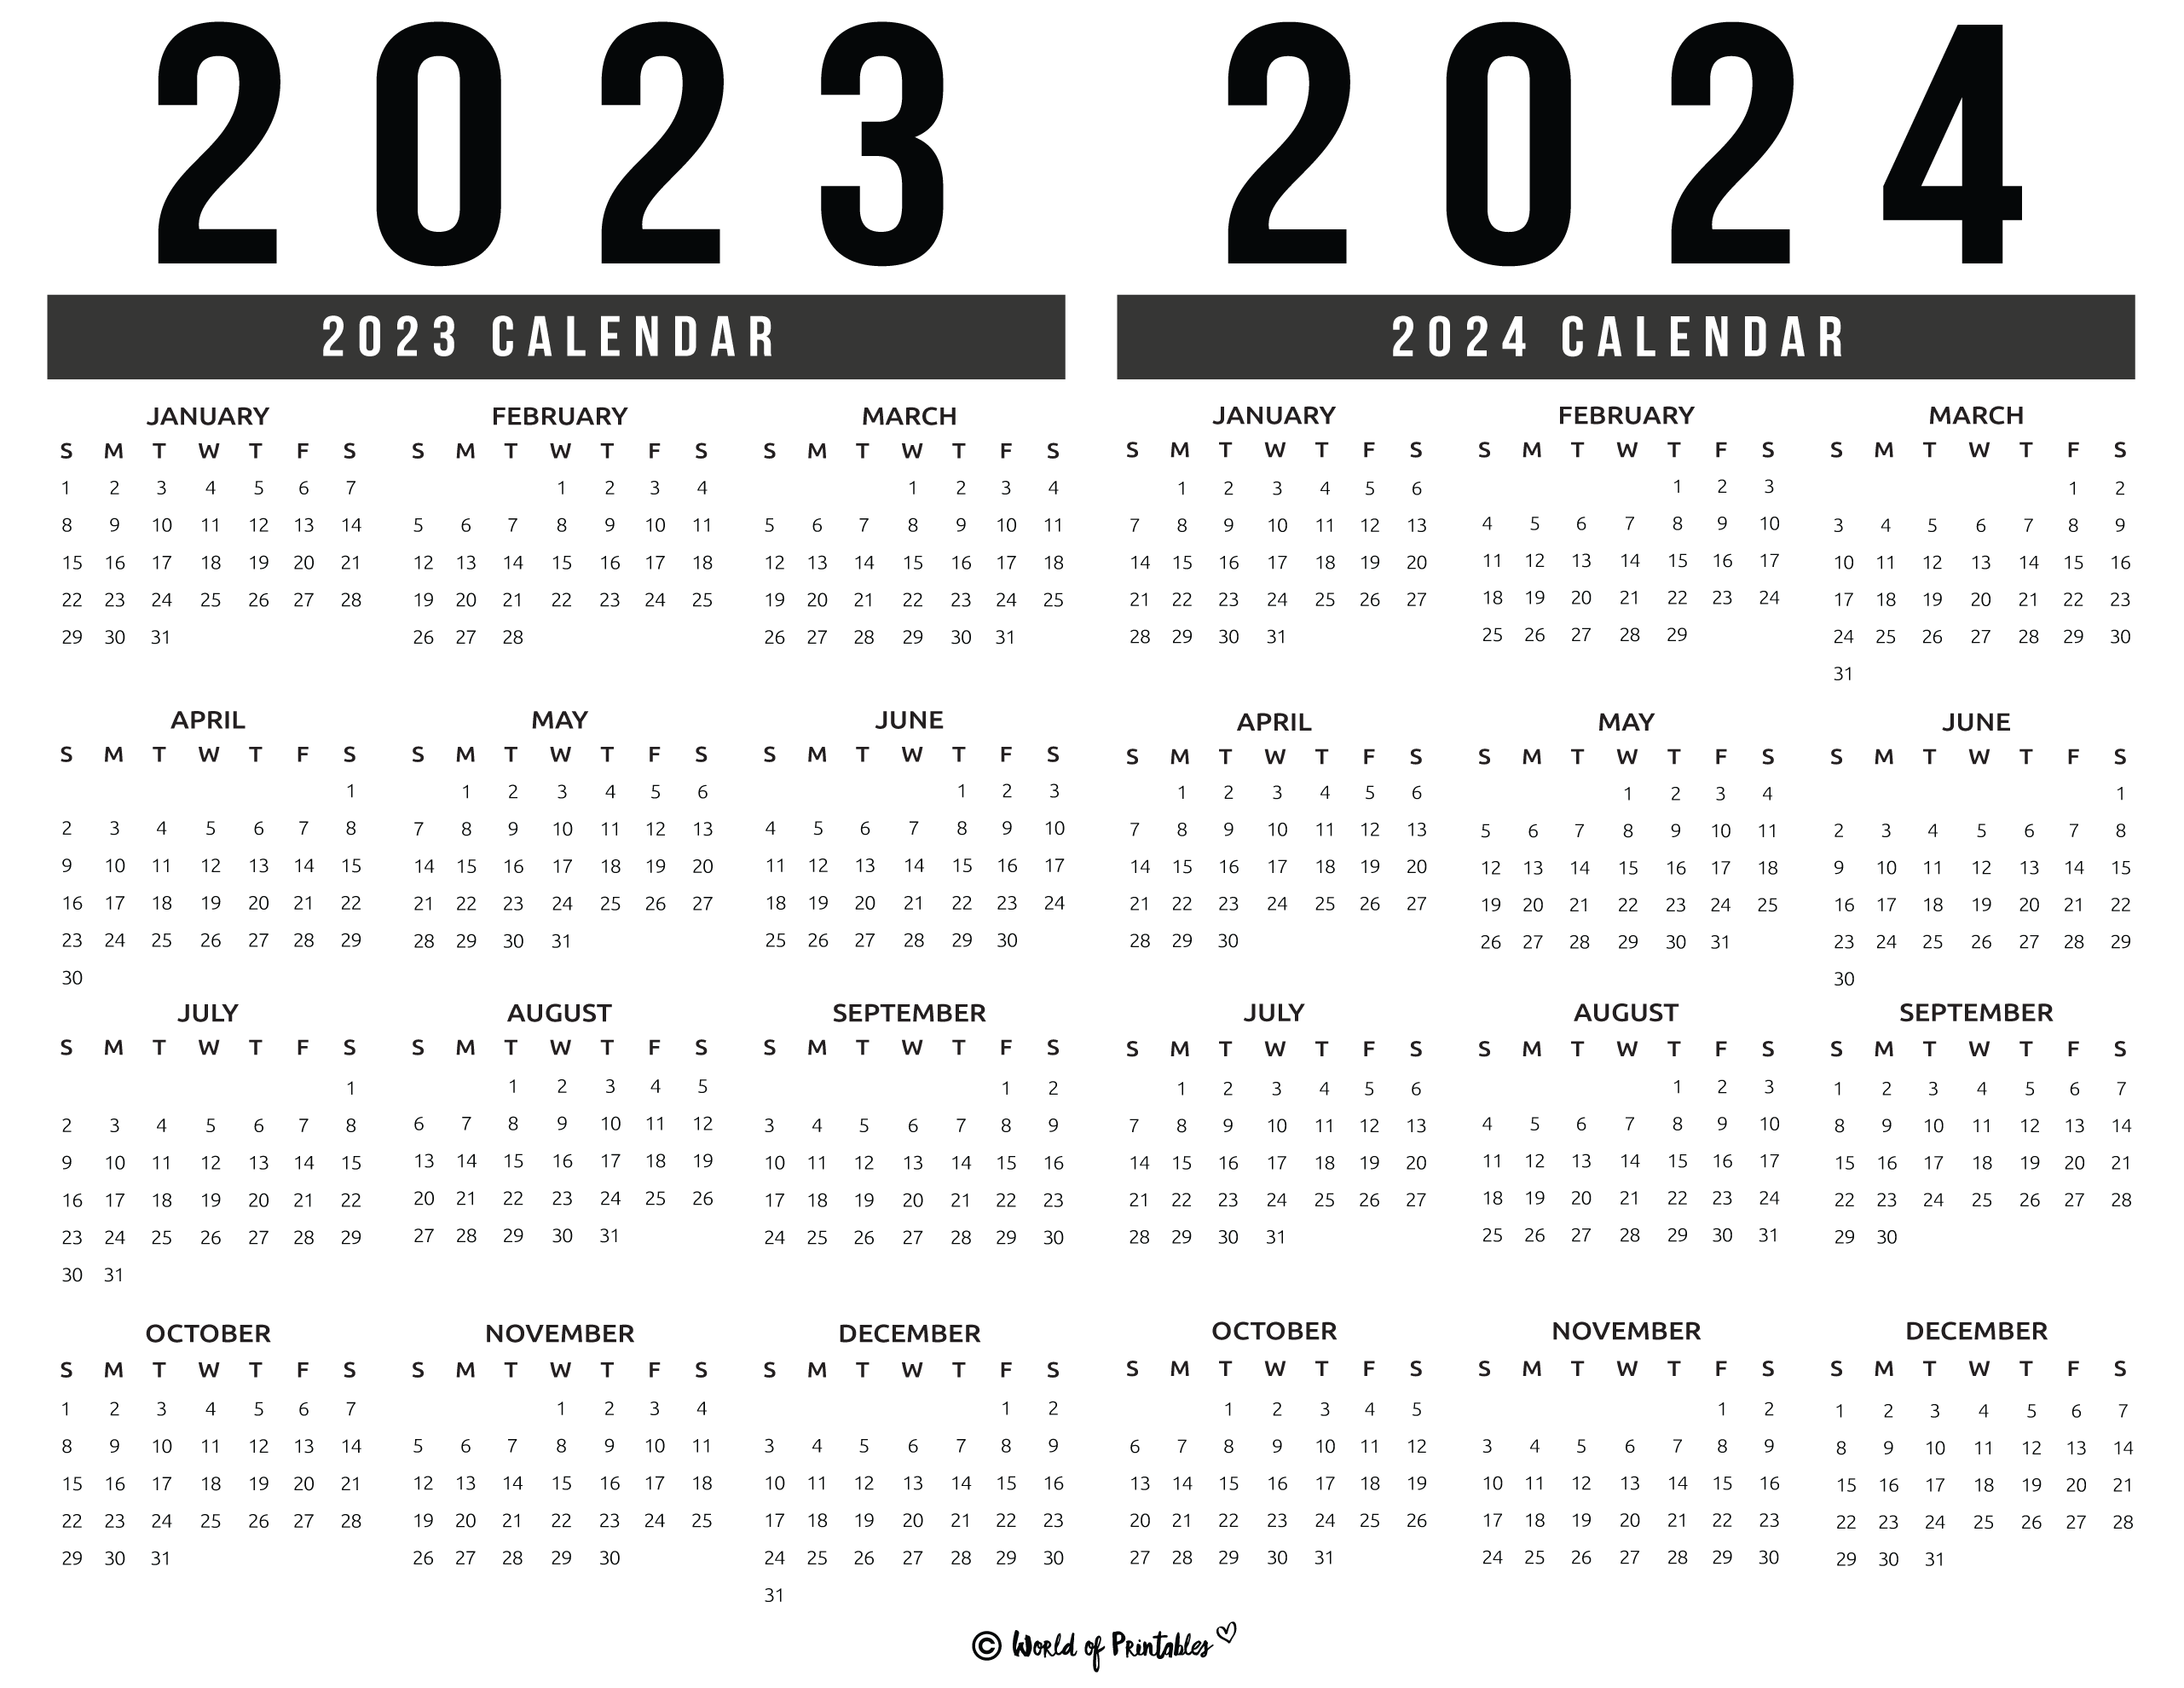 2023 2024 Calendar Free Printables - World Of Printables for 2023 2024 Printable Calendar